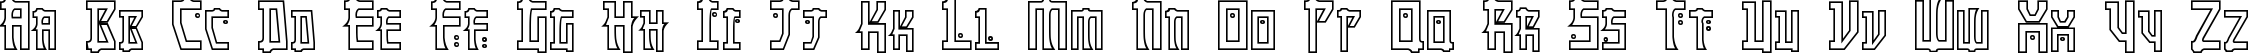 Пример написания английского алфавита шрифтом Manga Hollow